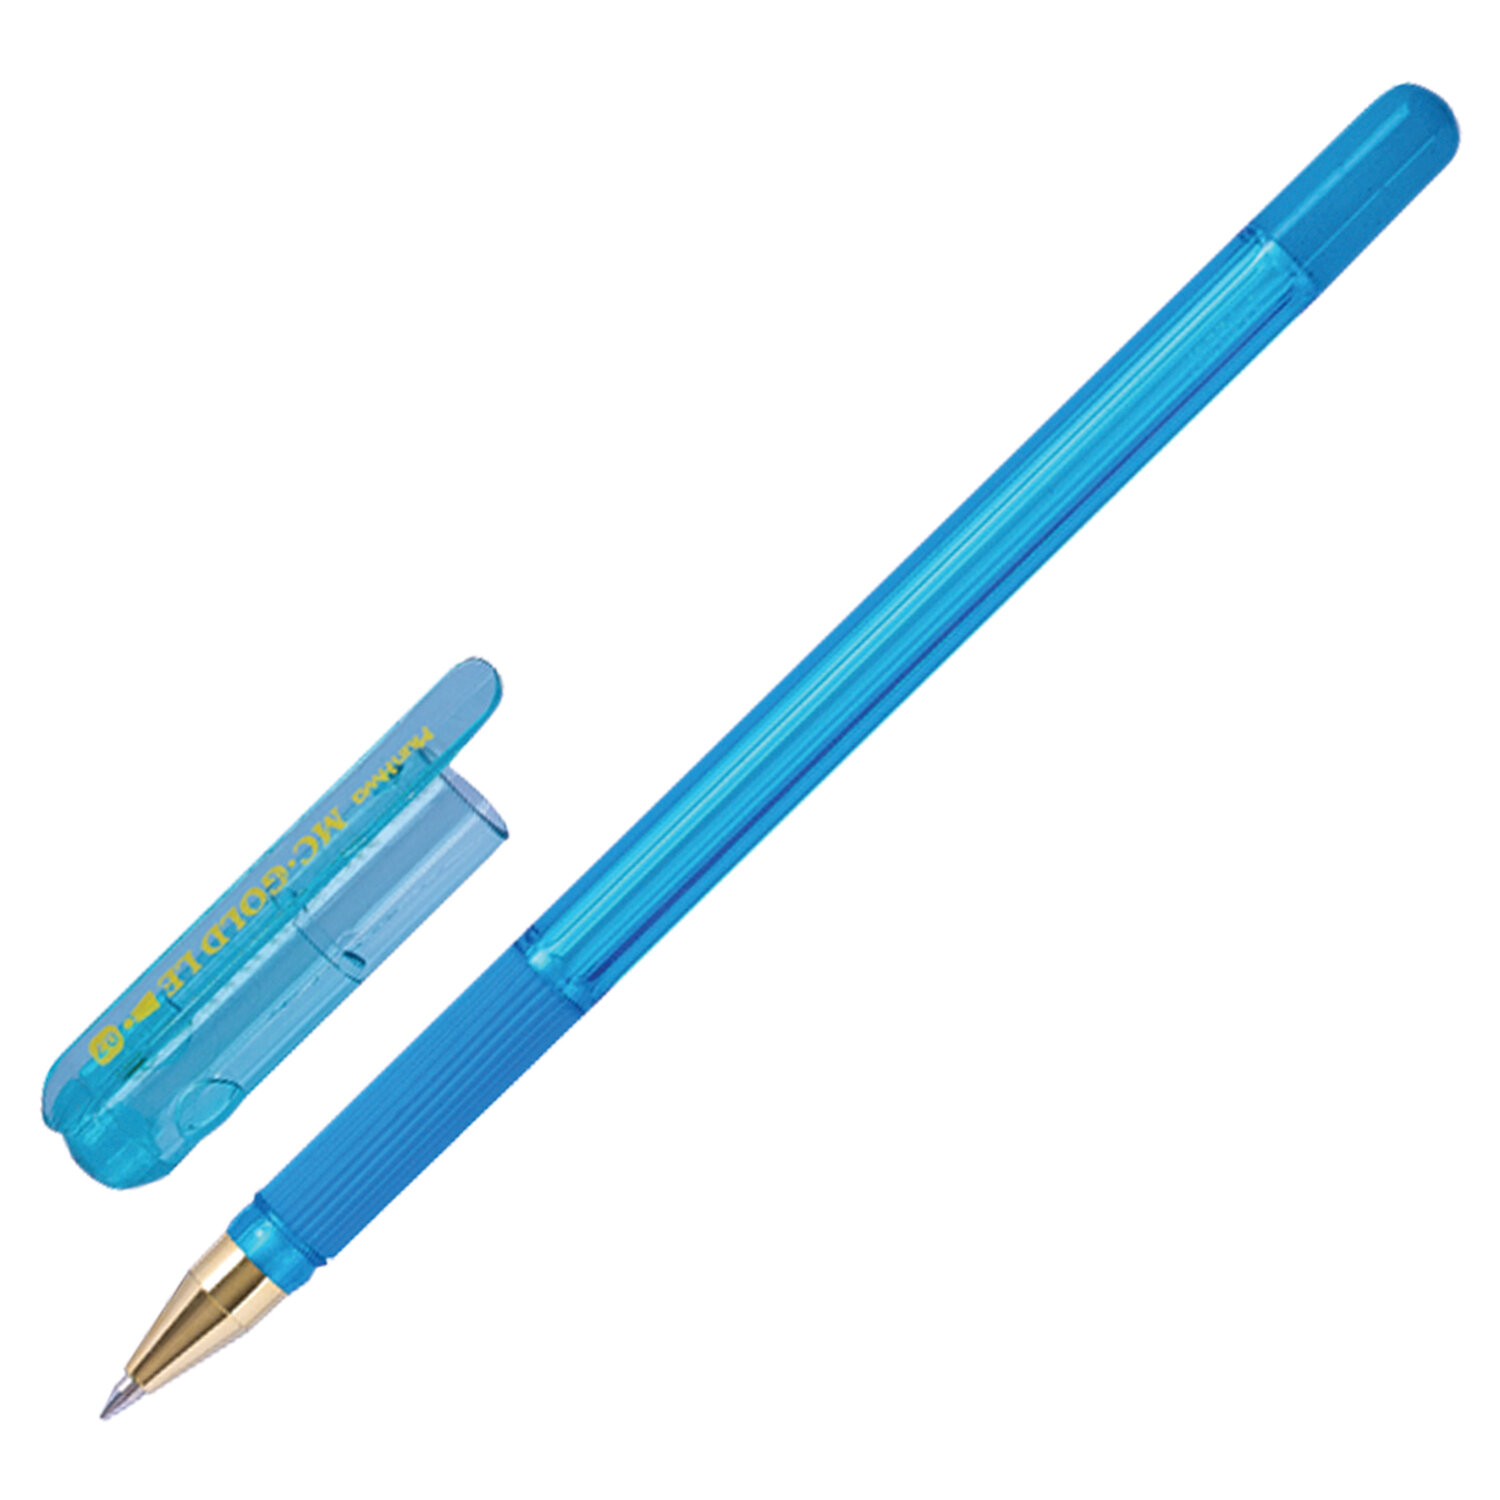 Mc gold ручка. MUNHWA MC Gold ручка. Ручка MUNHWA MC Gold 0.5. Ручка шариковая MUNHWA MC Gold синяя. Ручка шариковая MUNHWA "MC Gold le" синяя, 0,5мм, грип.